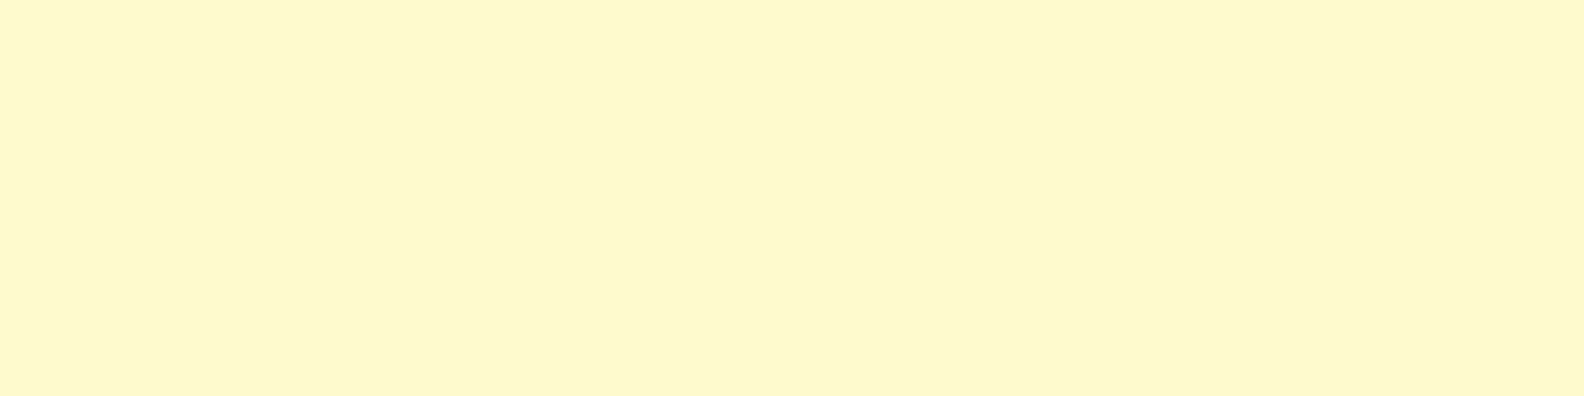 1584x396 Lemon Chiffon Solid Color Background